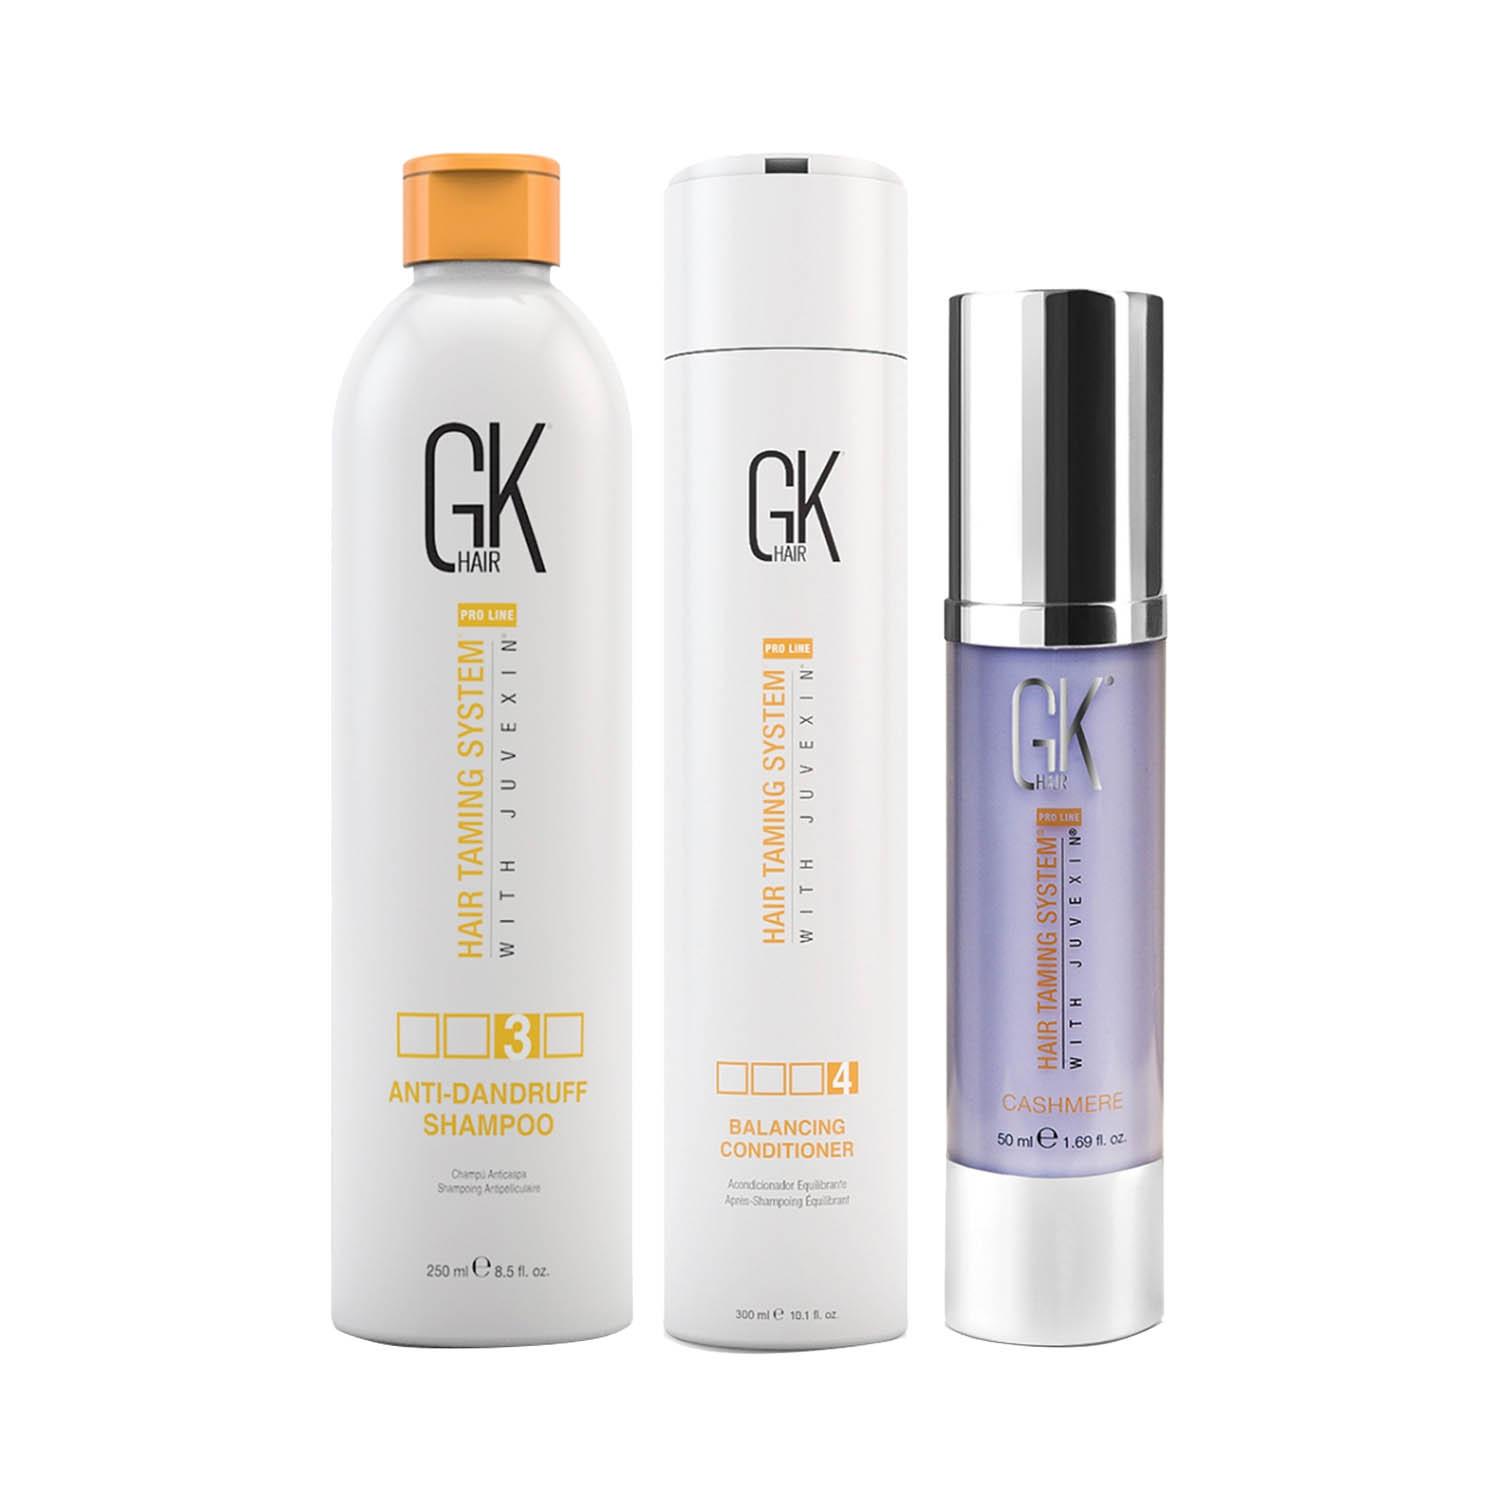 GK Hair | GK Hair Anti Dandruff Shampoo 250ml with Balancing Conditioner 300ml and Cashmere 50ml